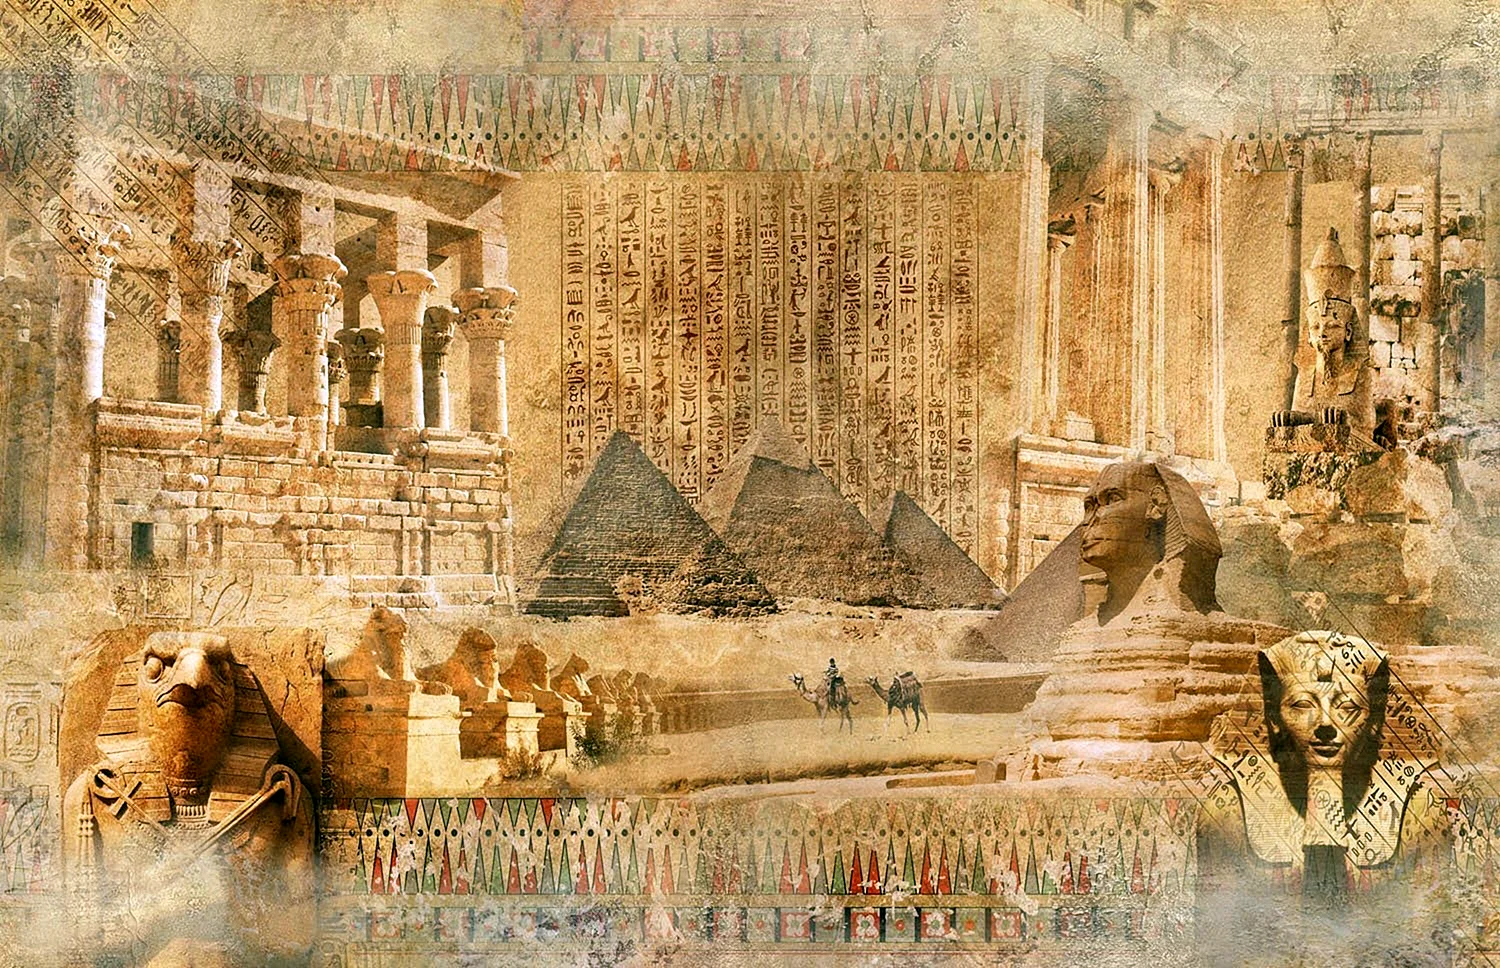 Дворец фараона